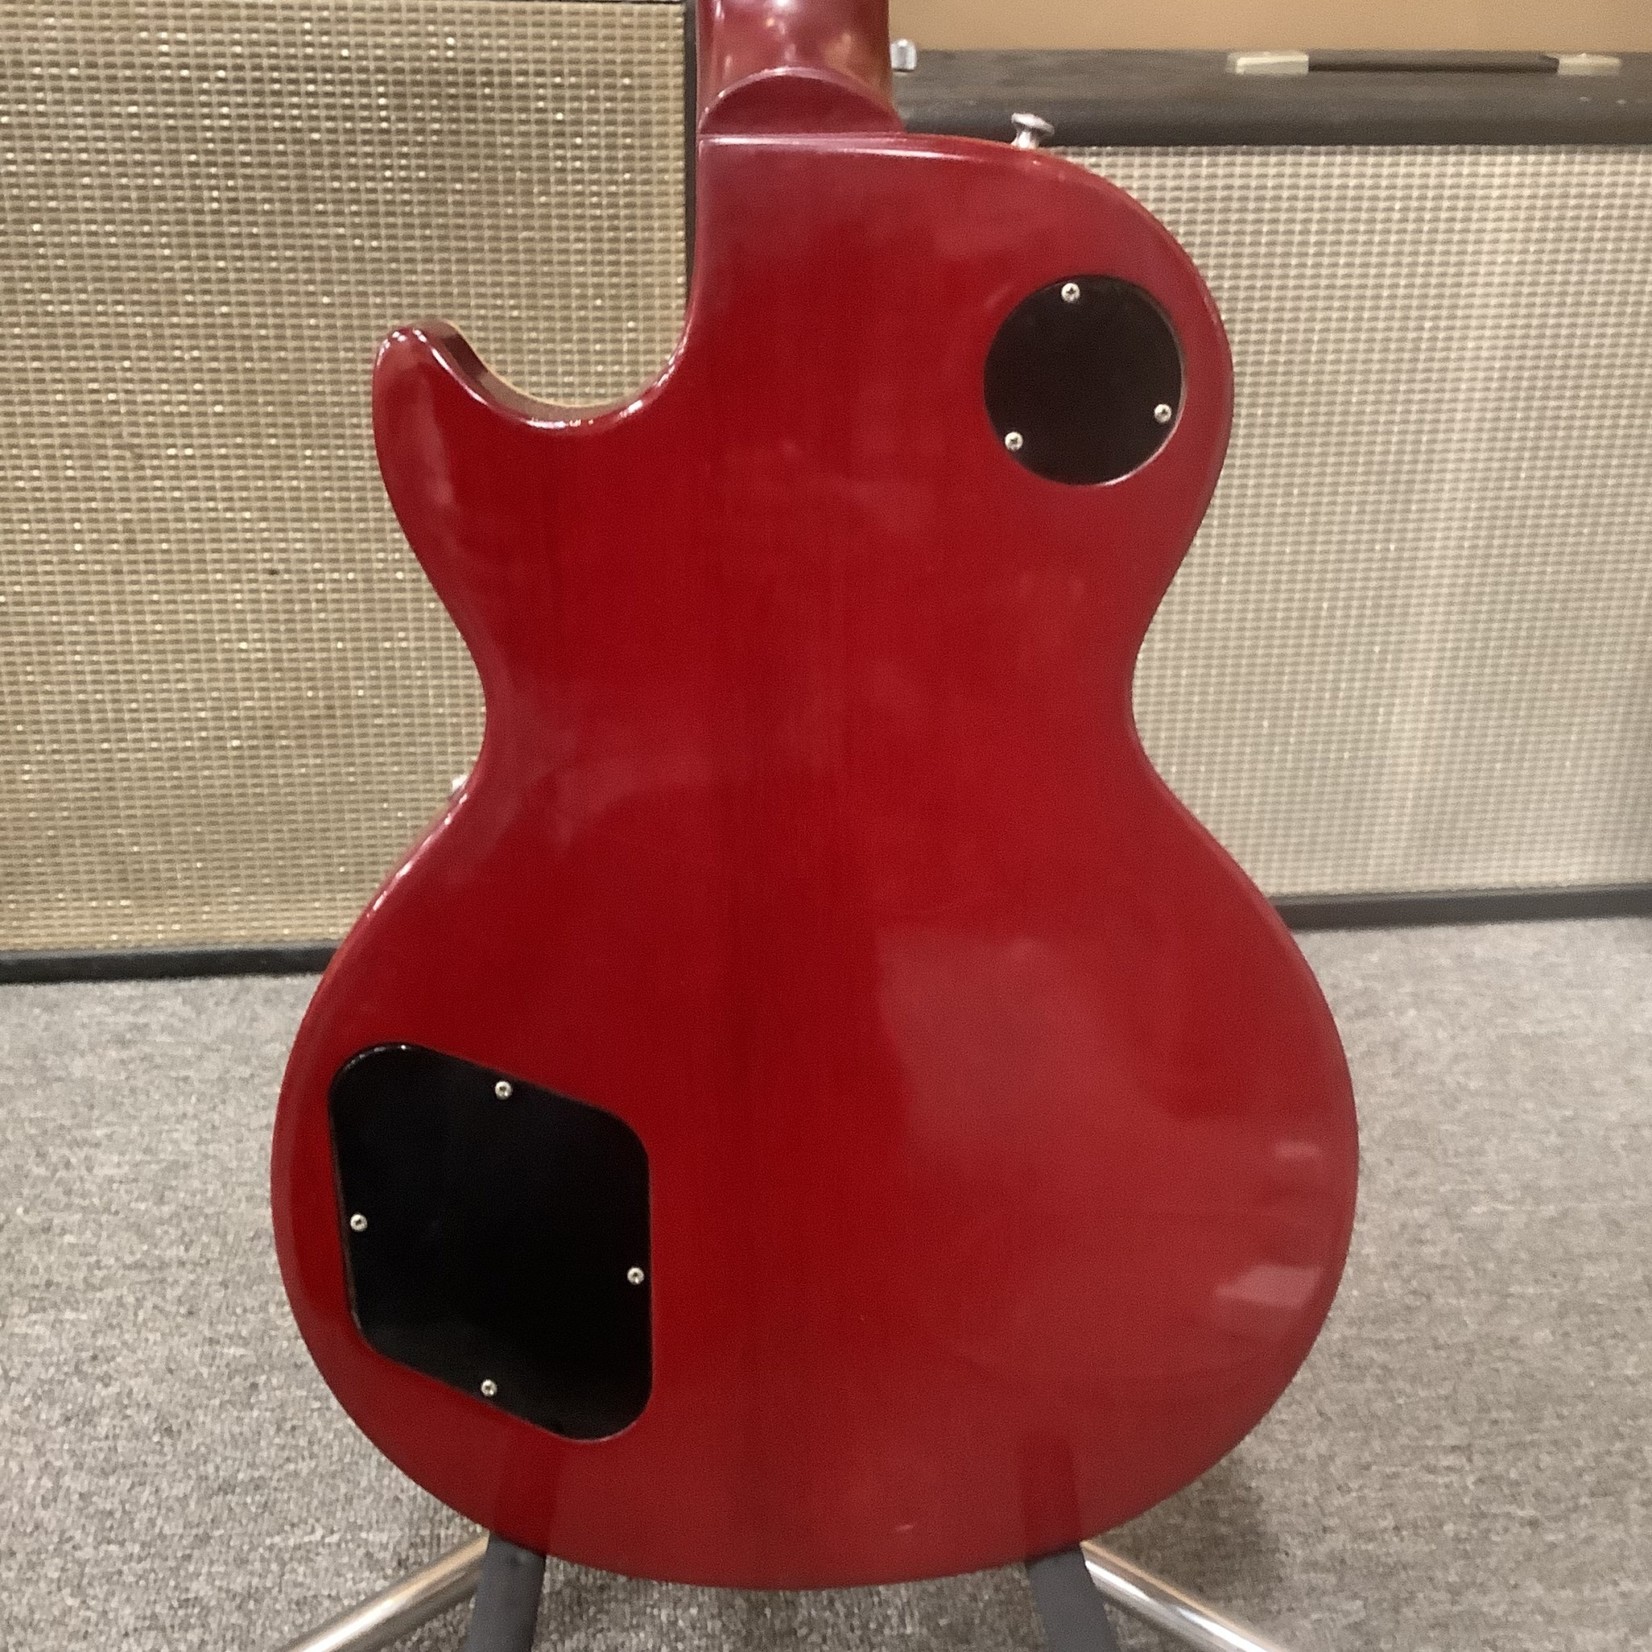 Gibson Gibson Les Paul Classic Cherry Burst